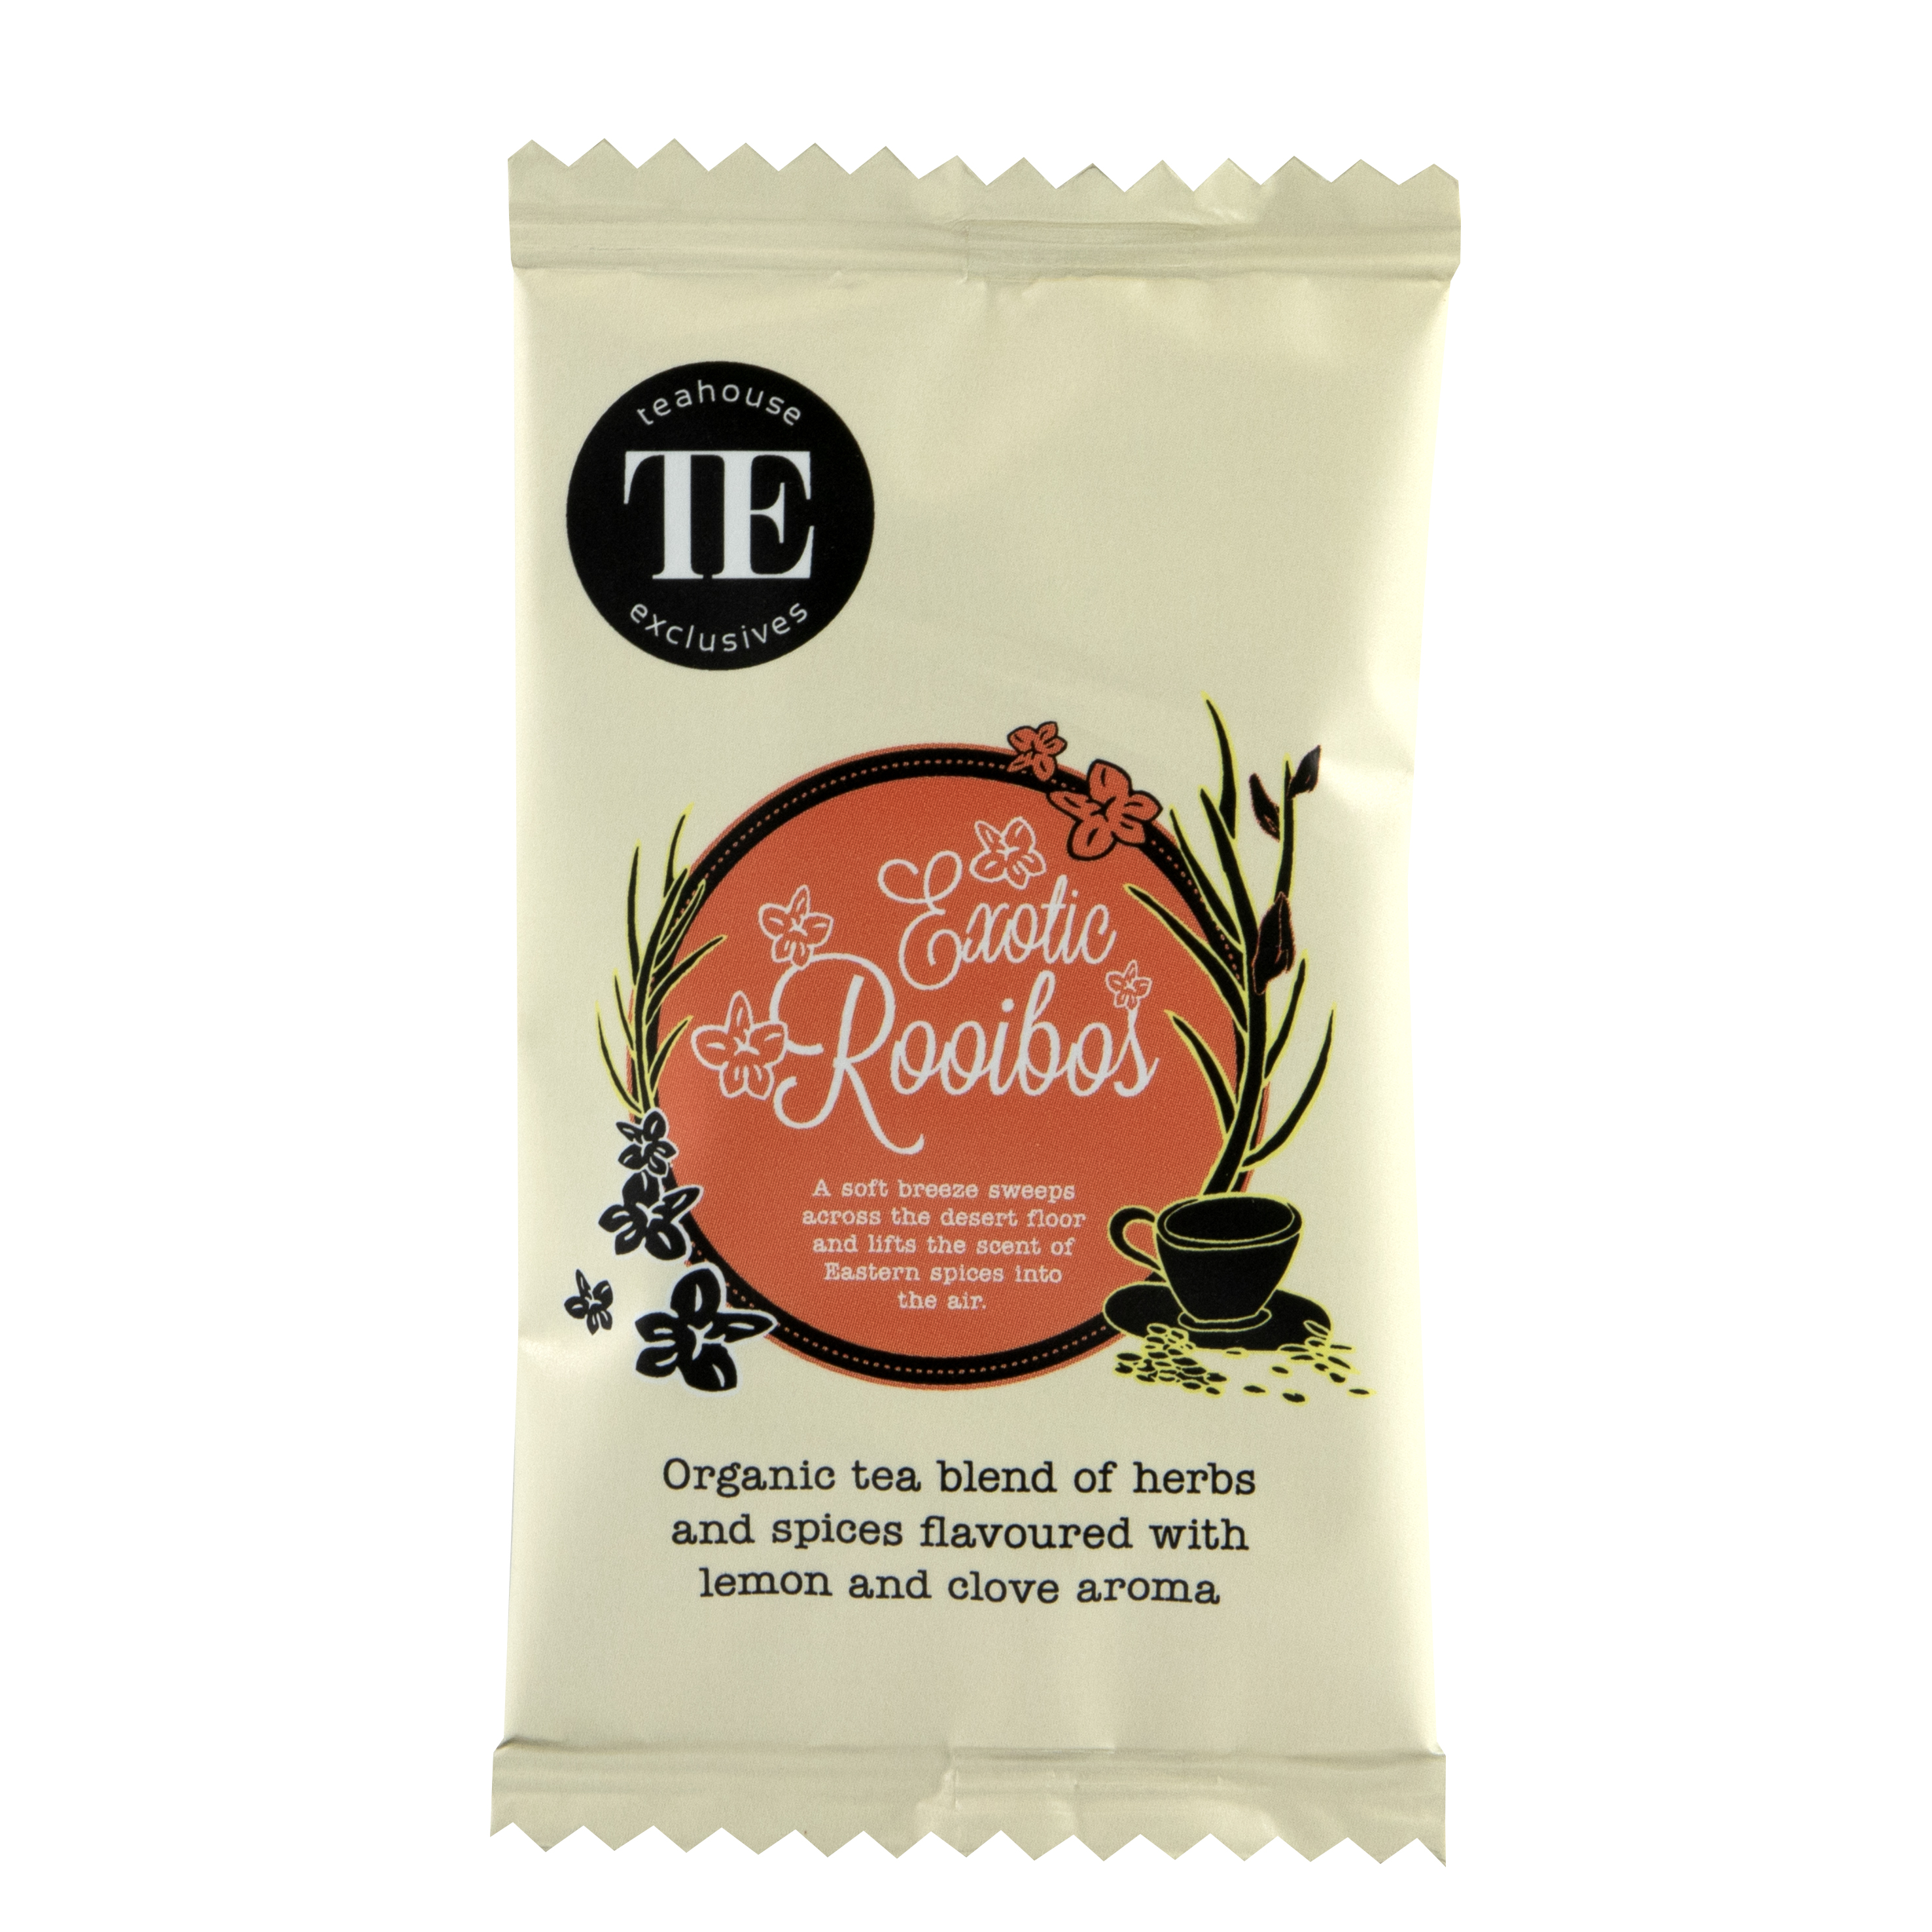 Organic Tea Exotic Rooibos